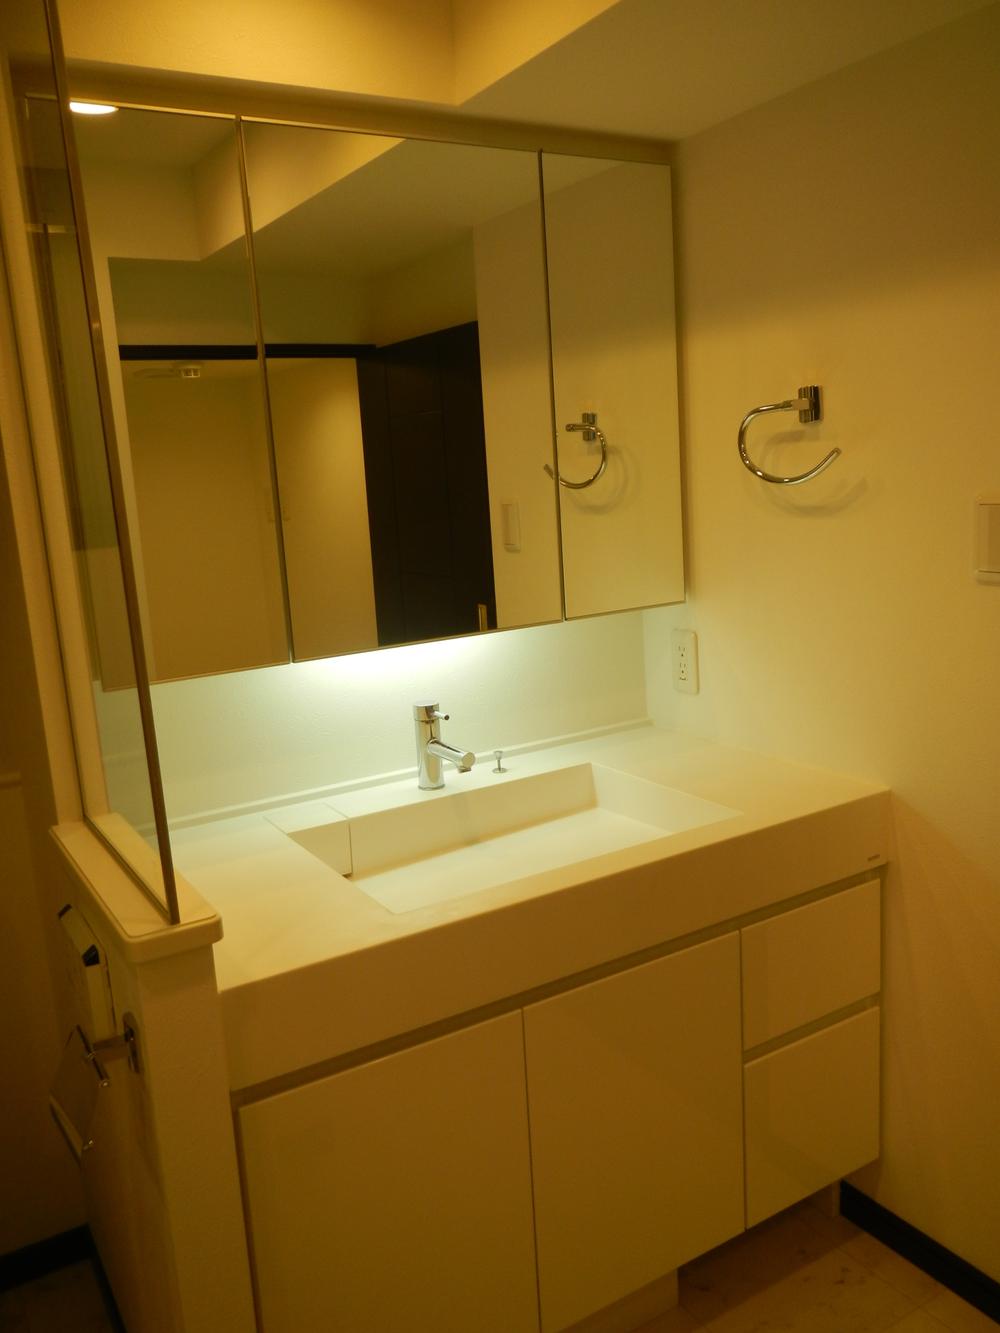 Wash basin, toilet. Three-sided mirror with storage vanity